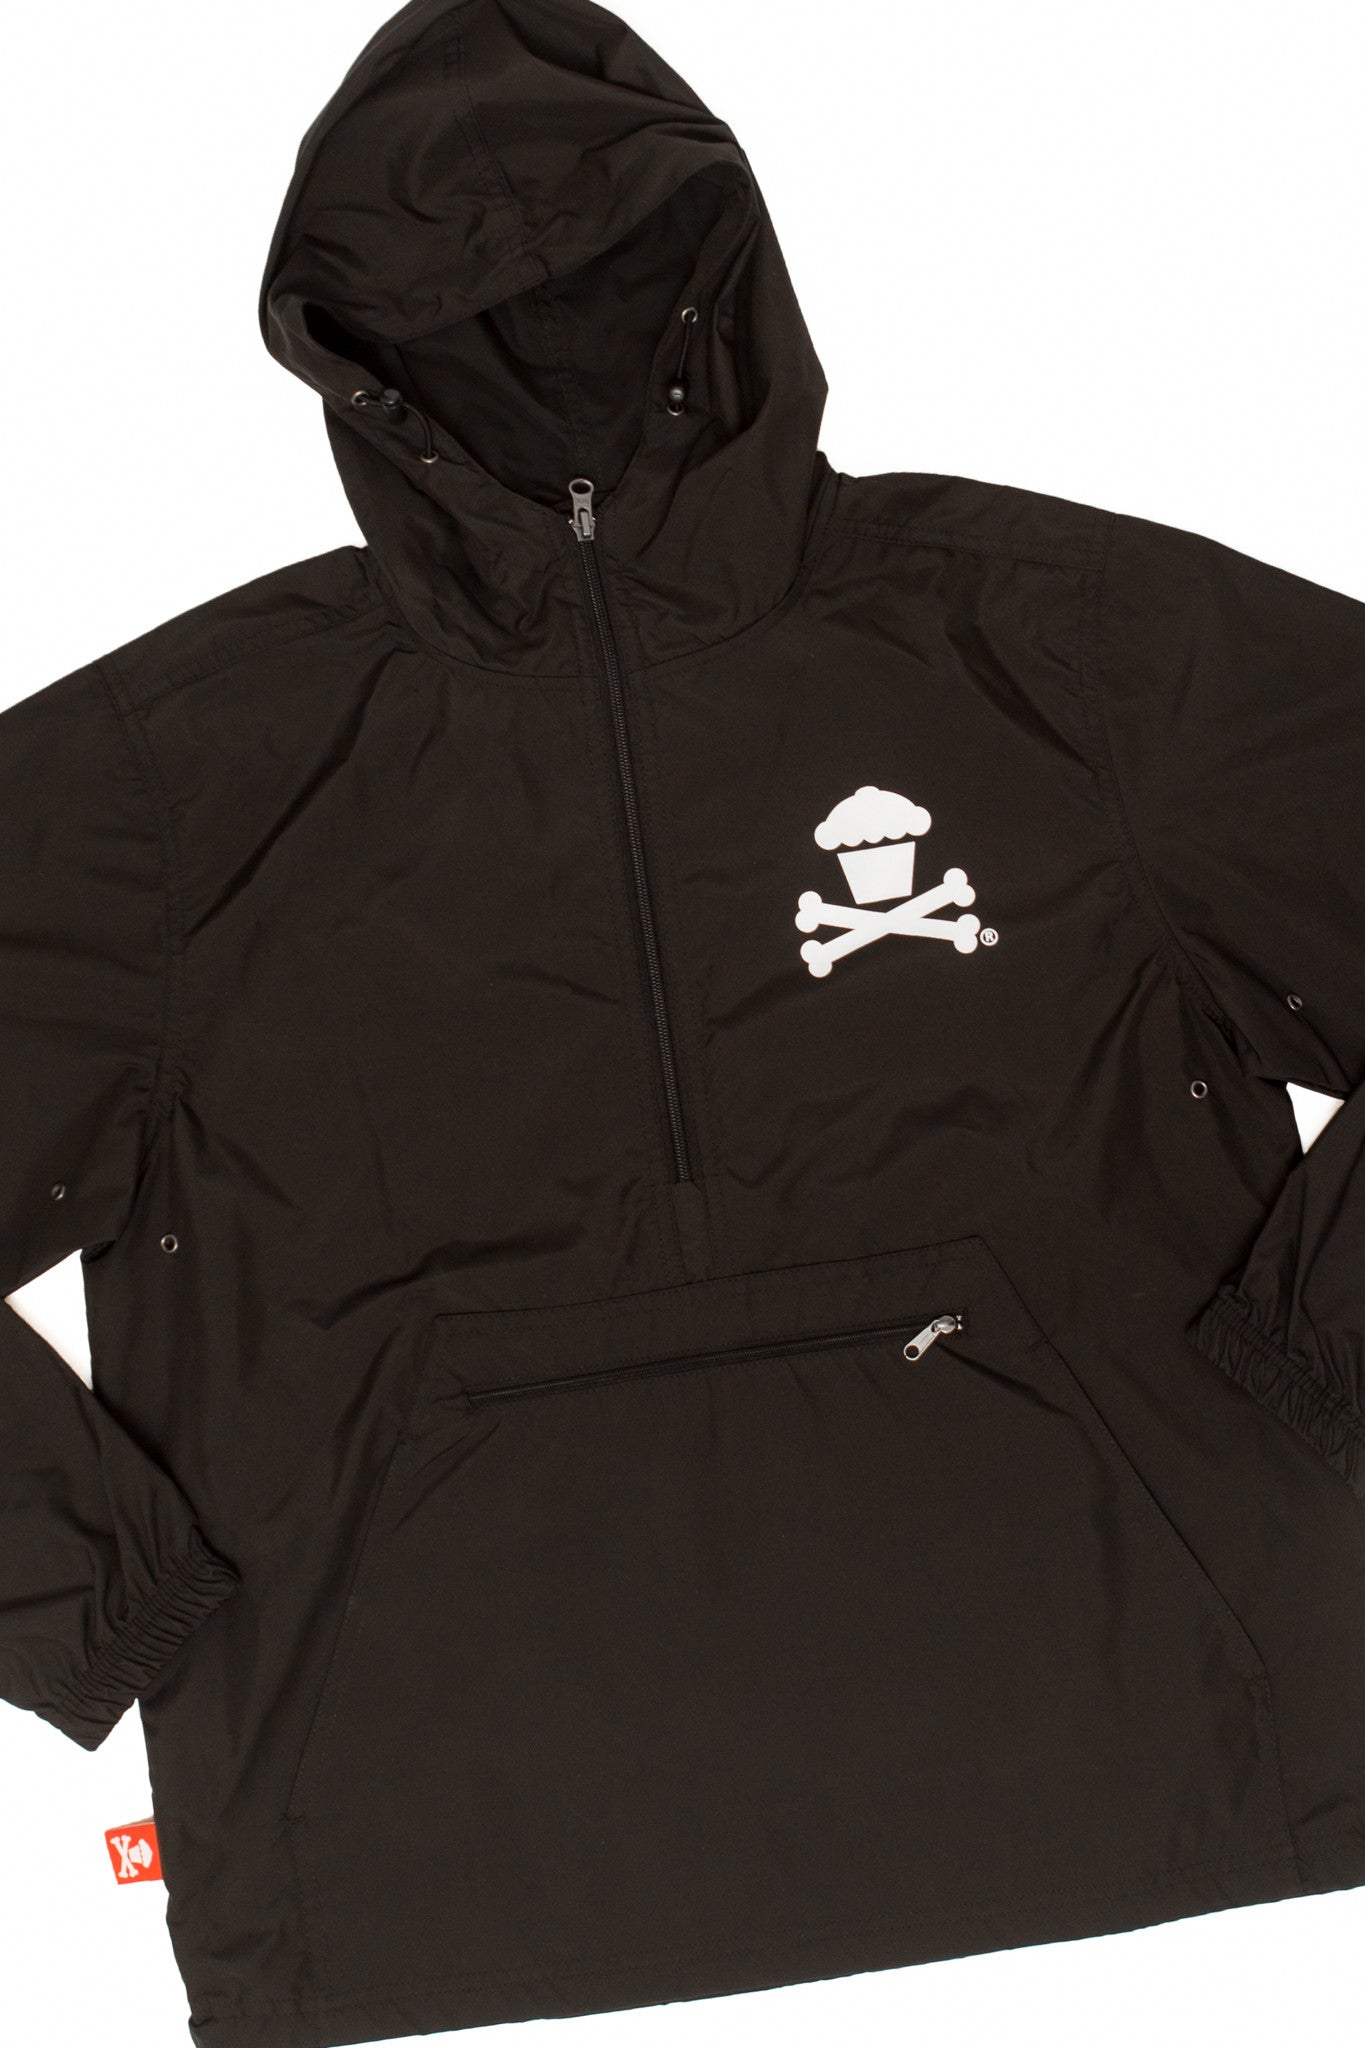 JC Vault - Adult Medium - Bones Crew Windbreaker Jacket